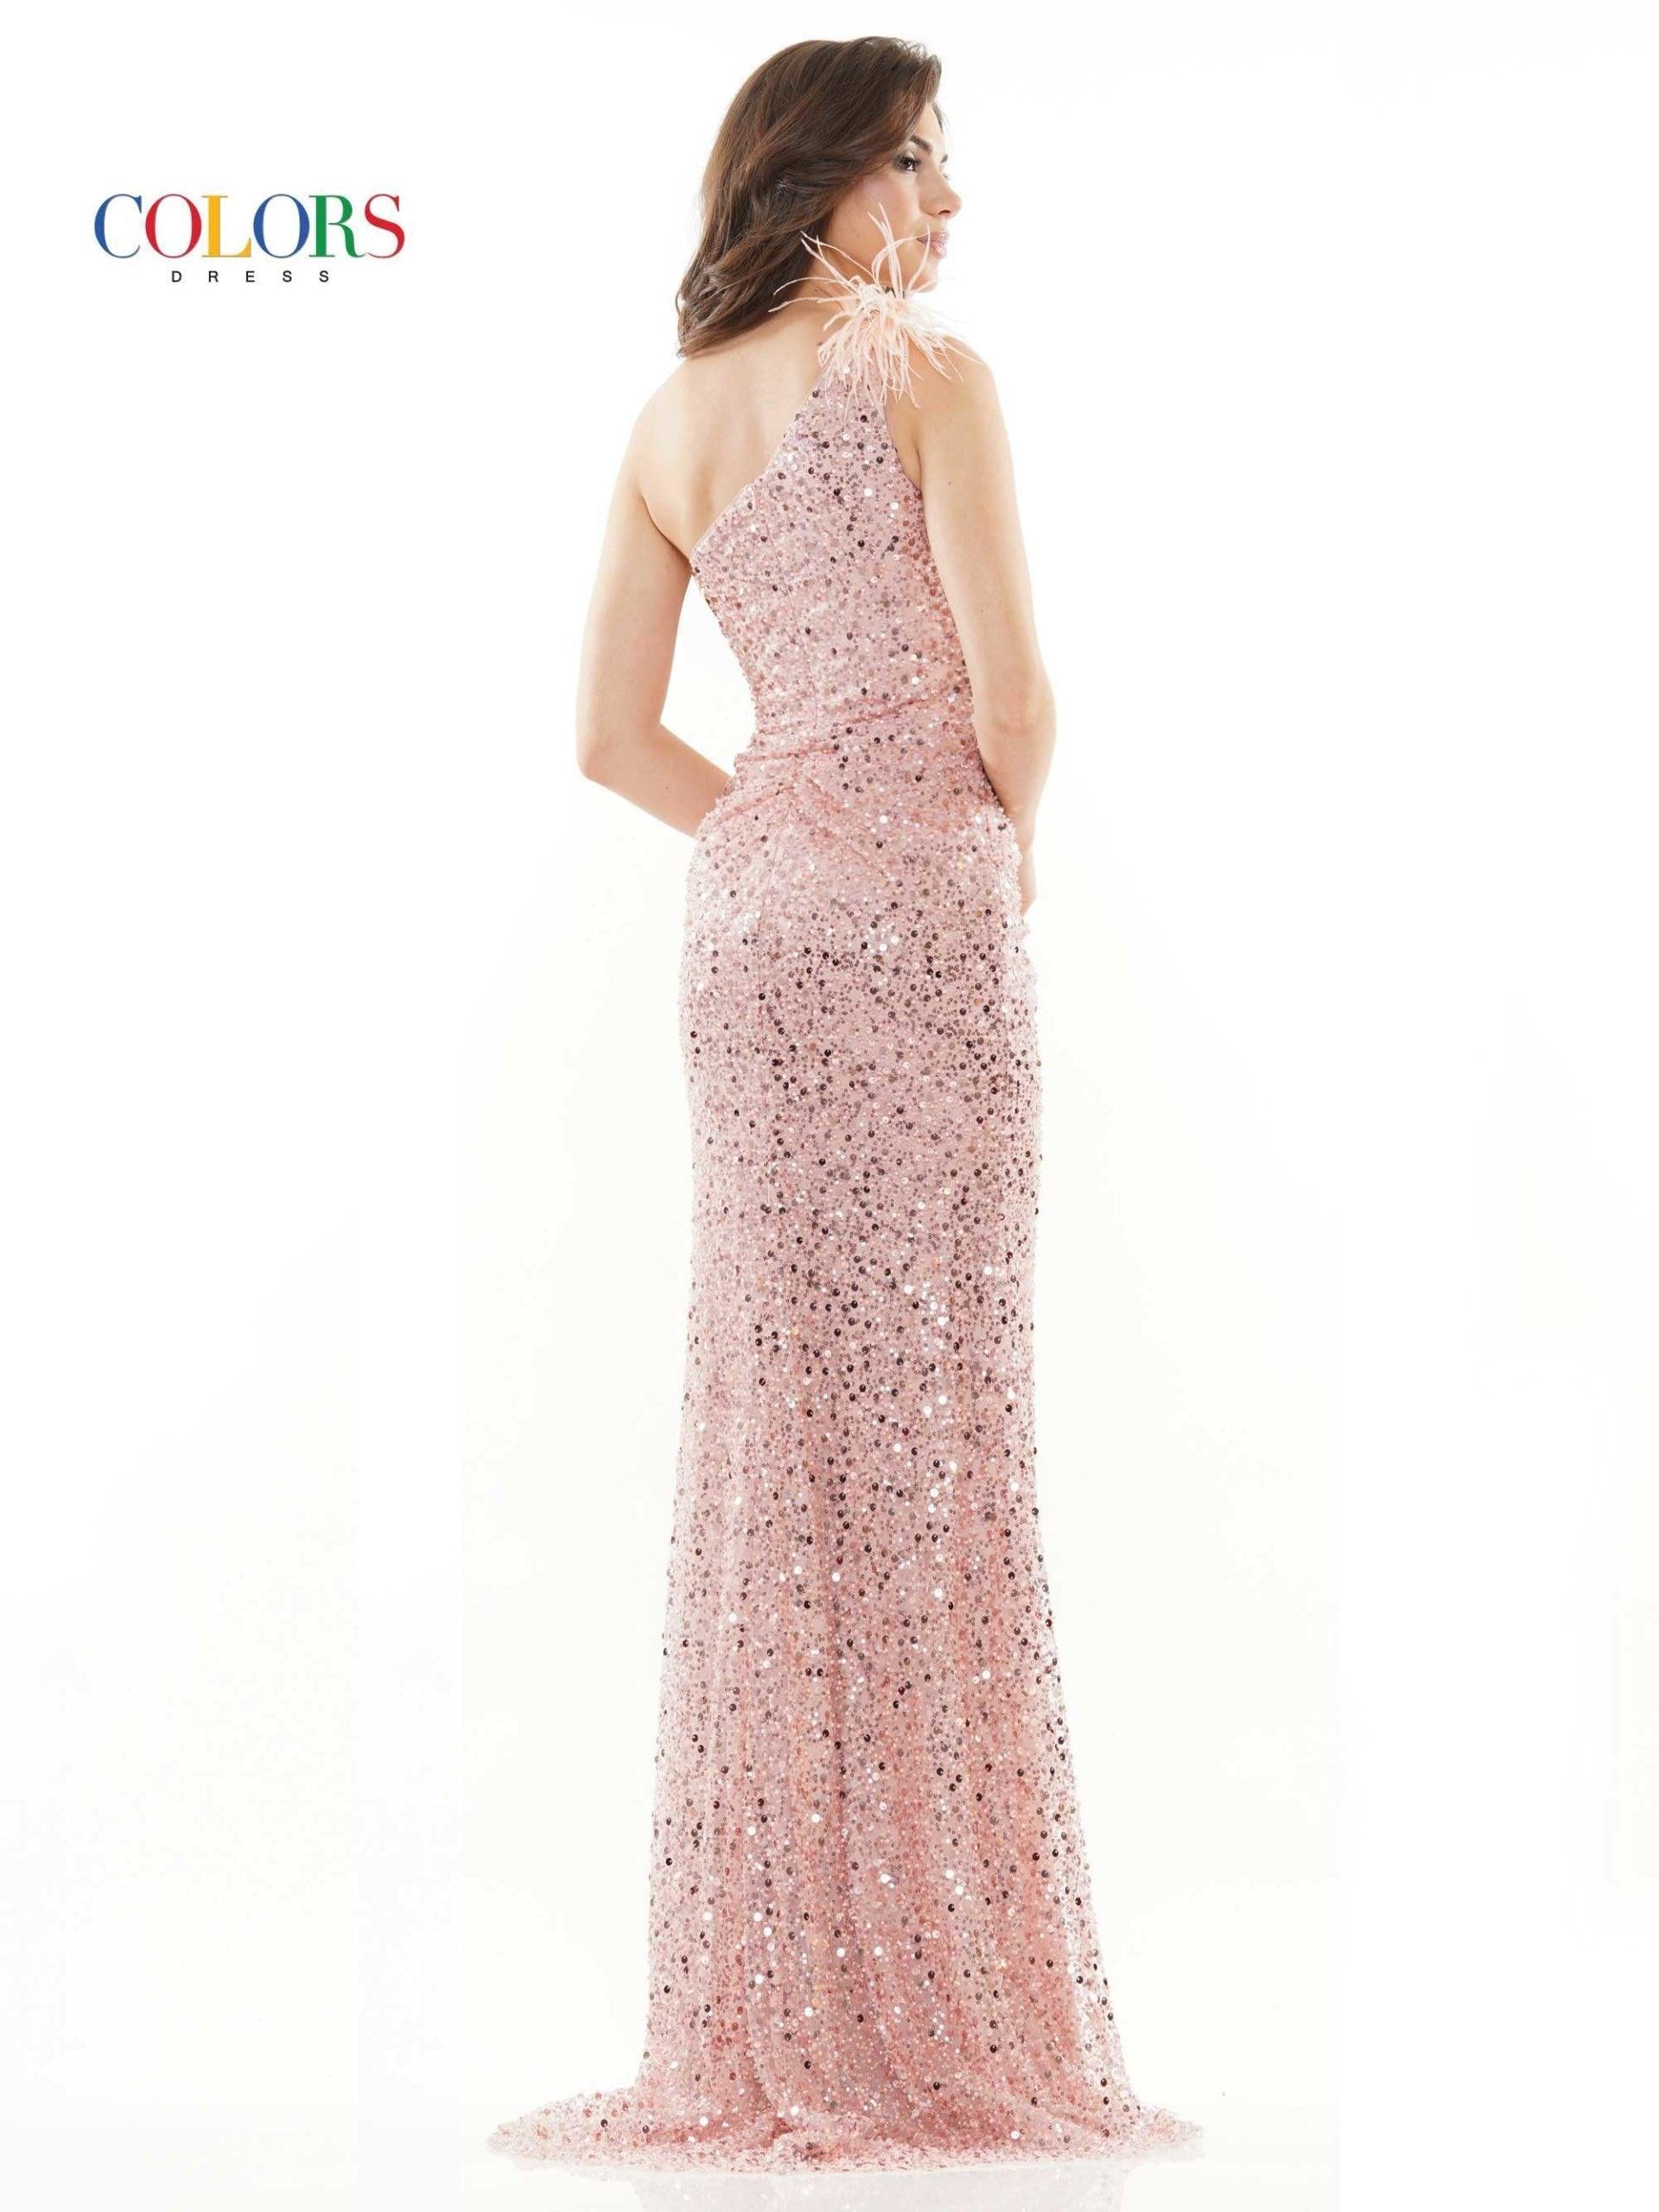 Colors Long Formal One Shoulder Prom Dress 2729 - The Dress Outlet